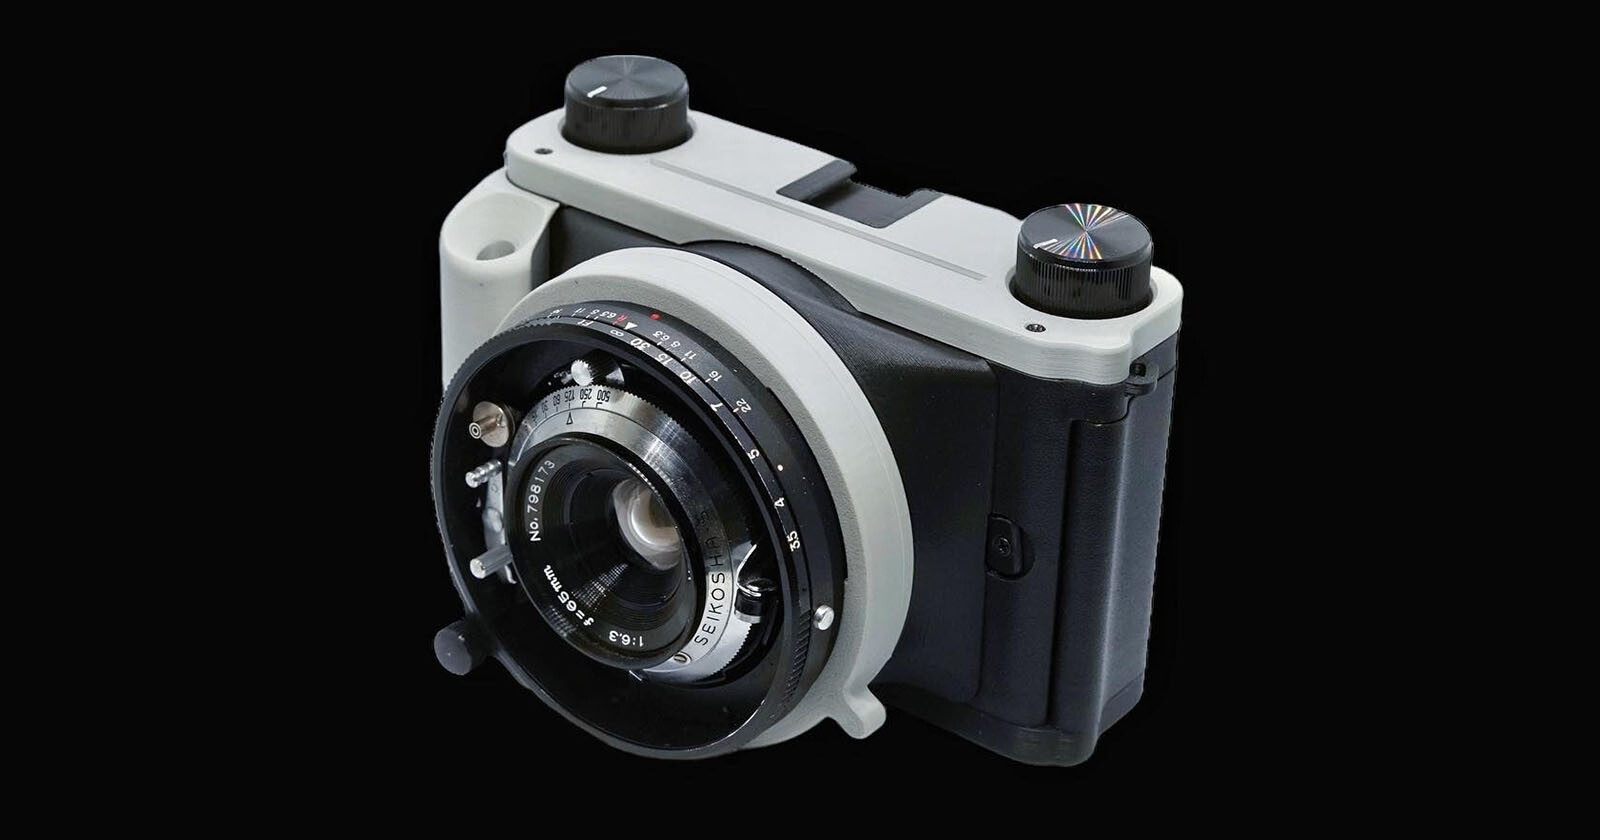  chroma cameras cubepan 35mm improved panoramic film camera 